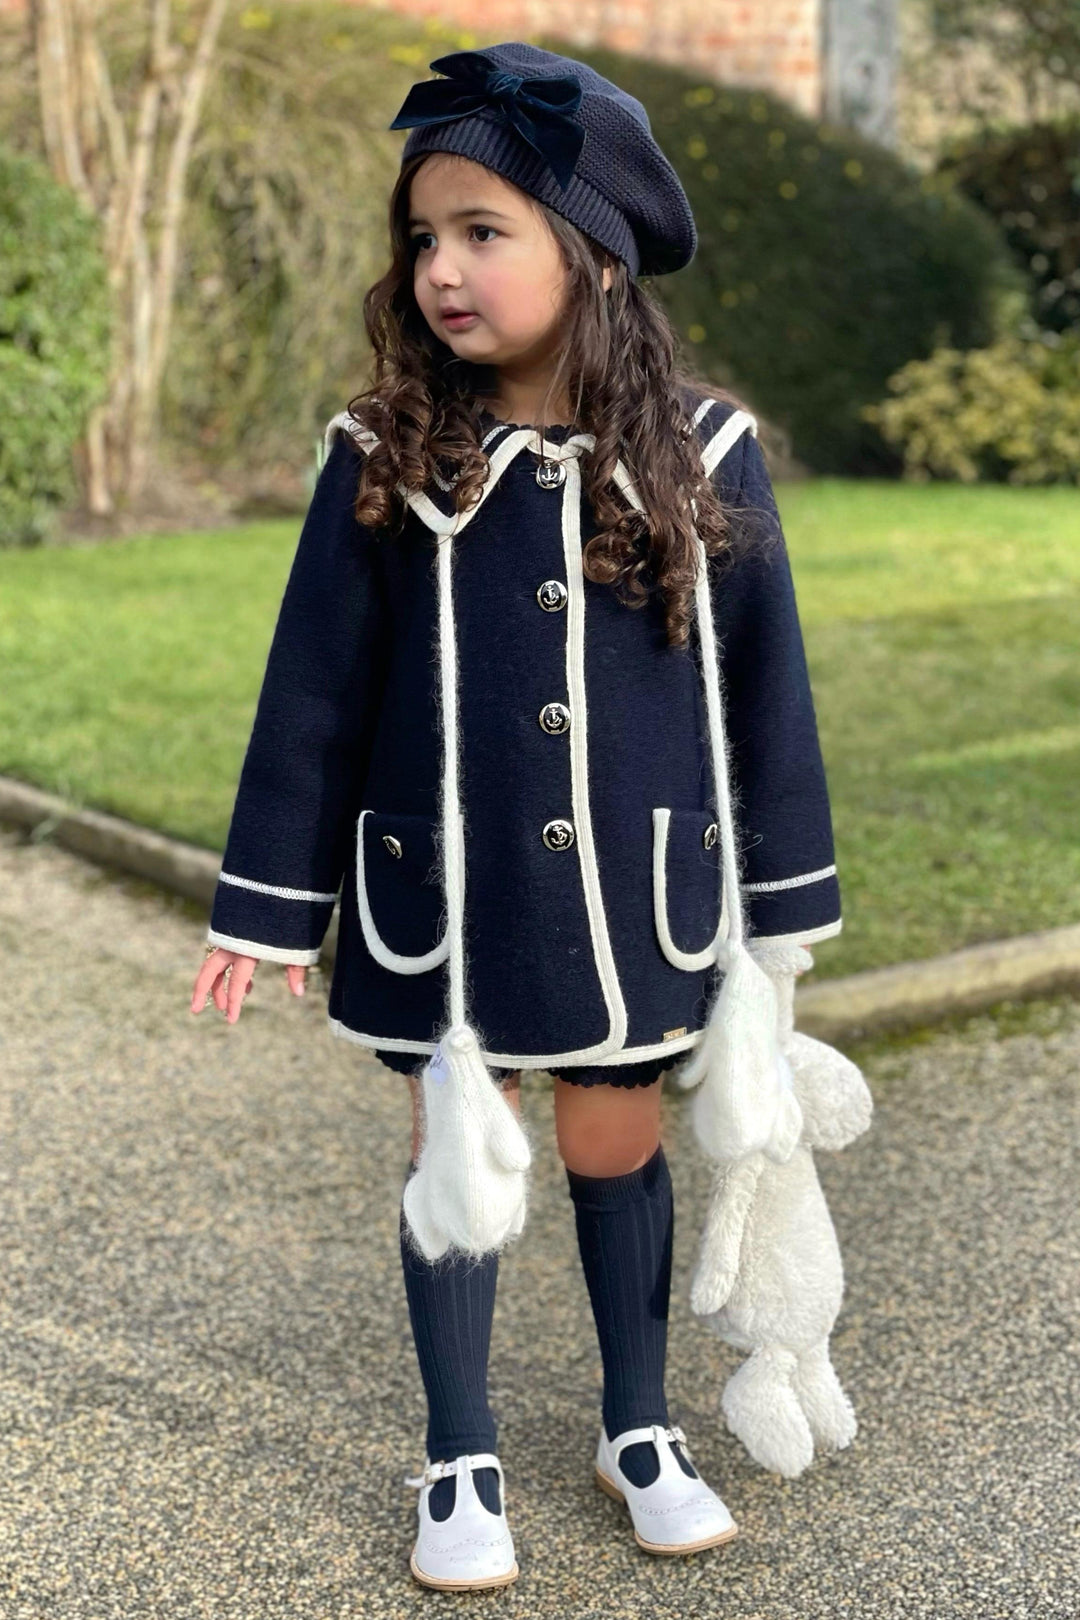 MARAE Kids "Artemis" Navy & Ivory Merino Wool Sailor Jacket | Millie and John